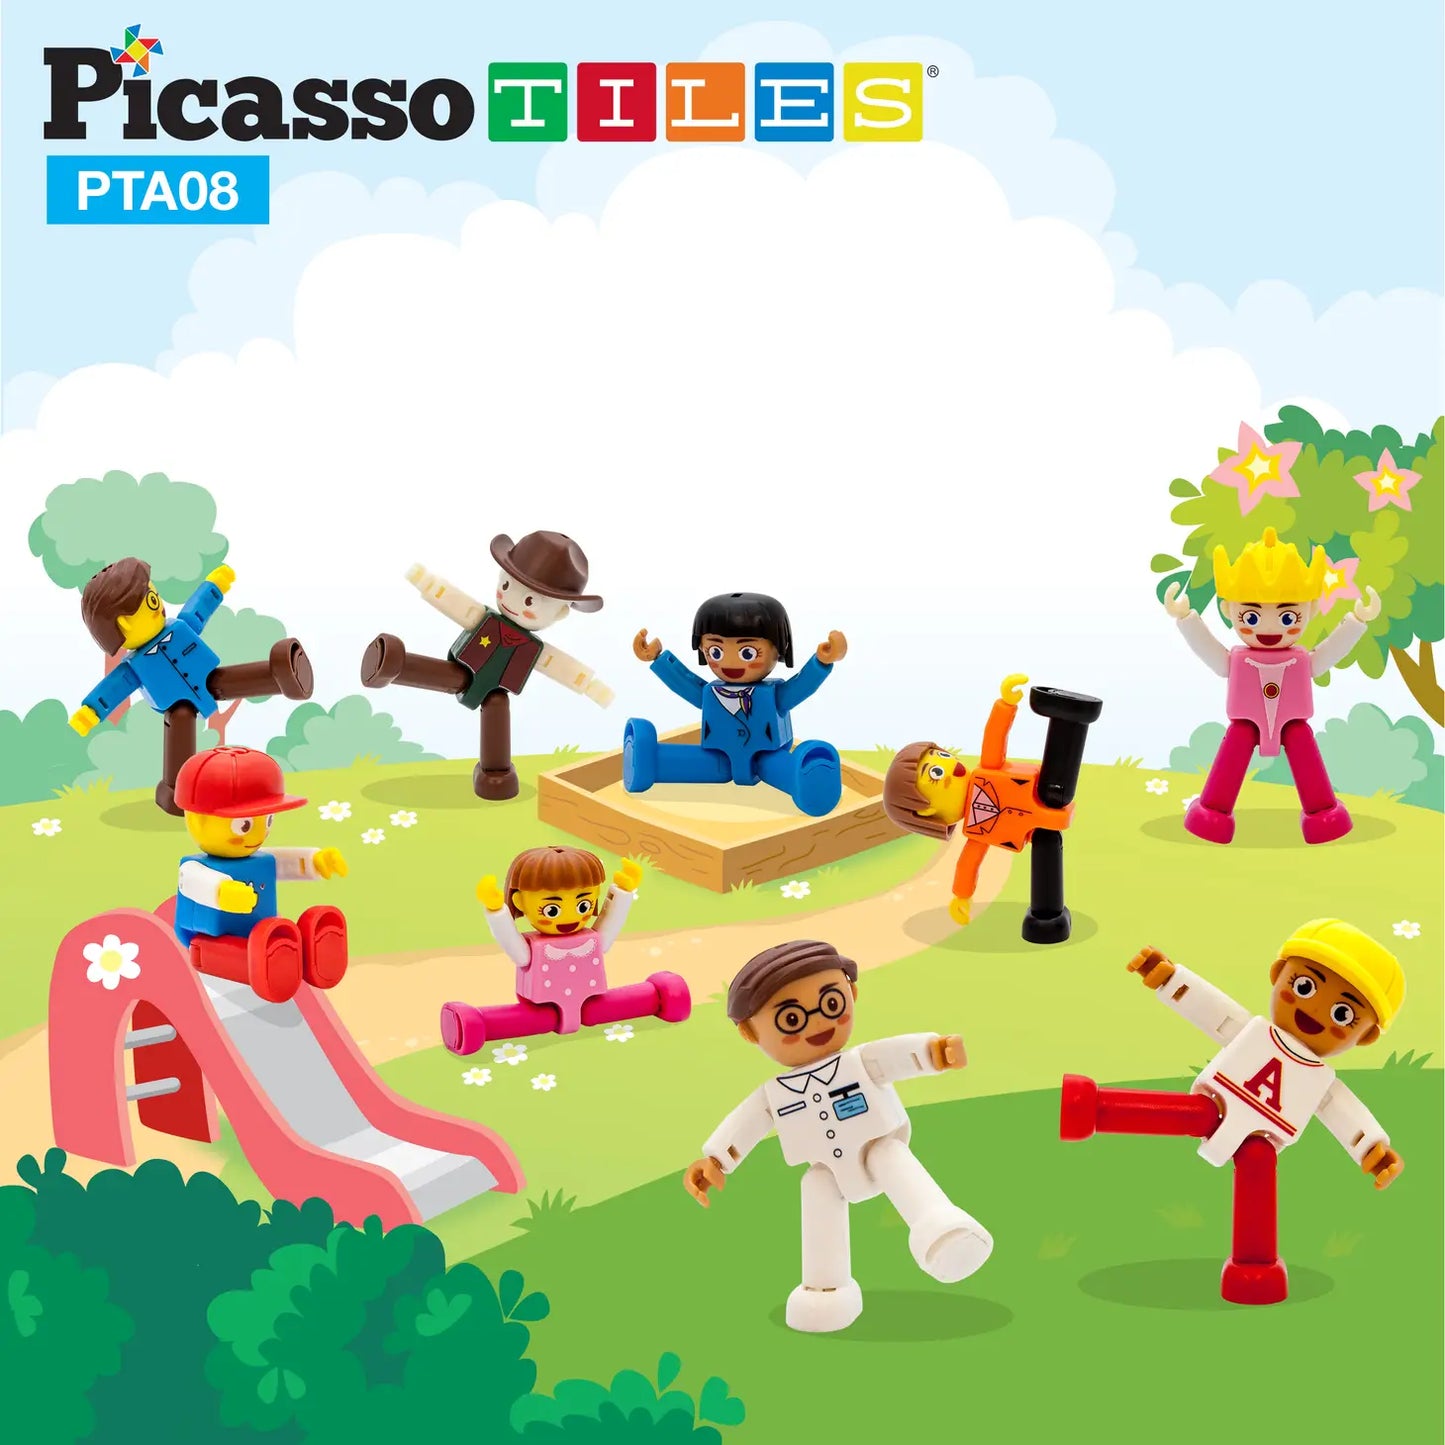 16 Piece Picasso Tiles Character Figure Set